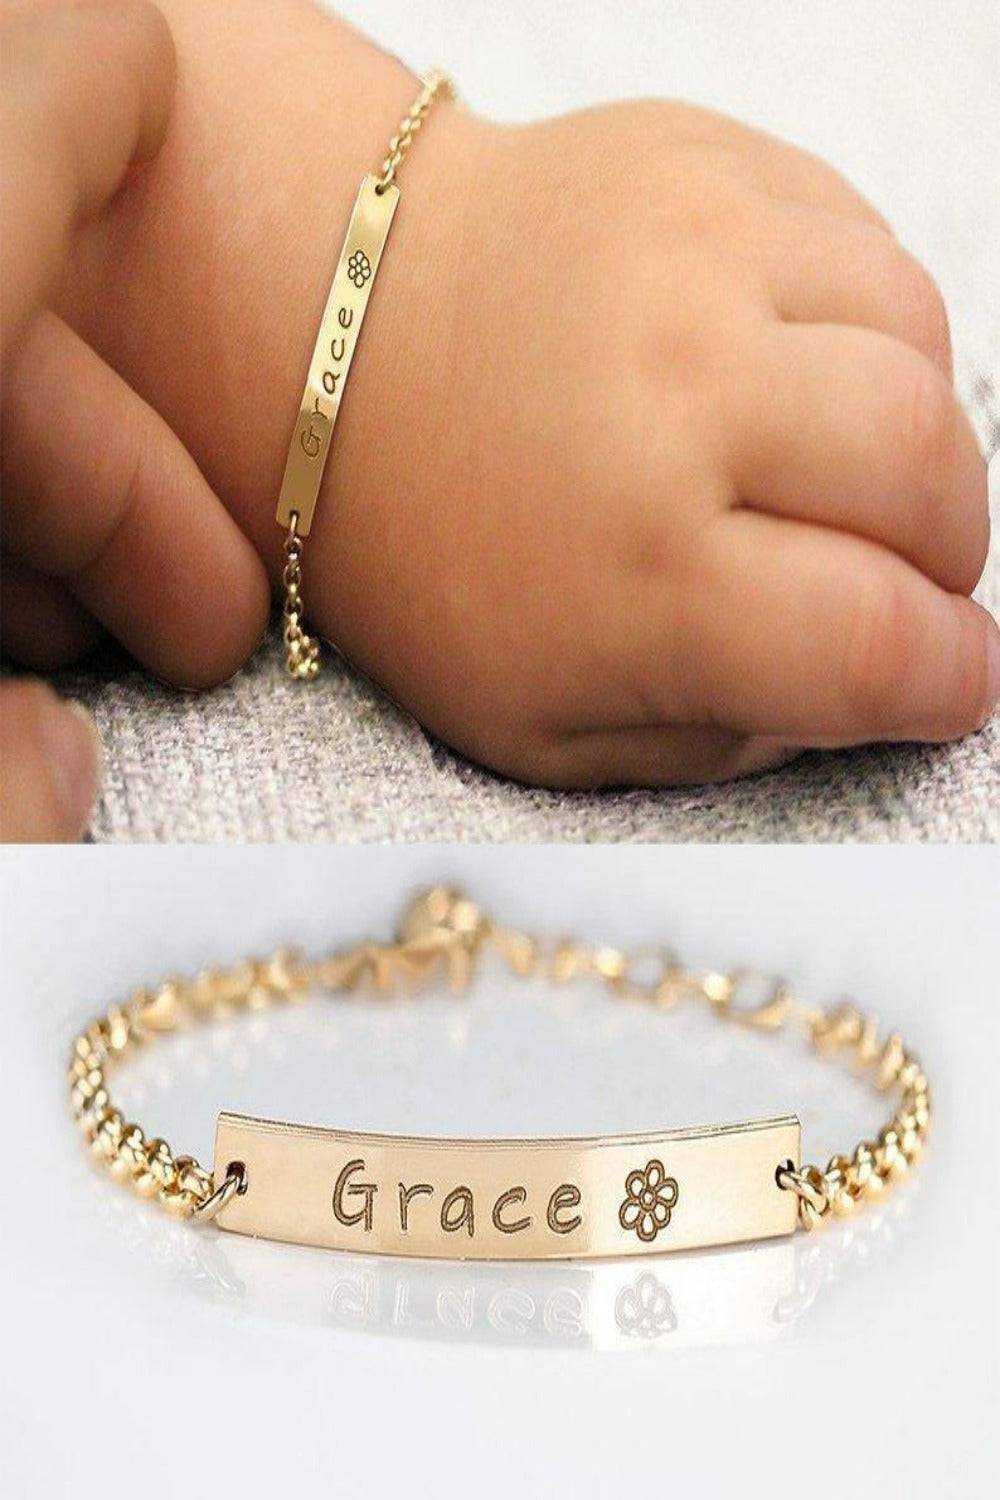 Boy / Girl (unisex) Baby Name Bracelet